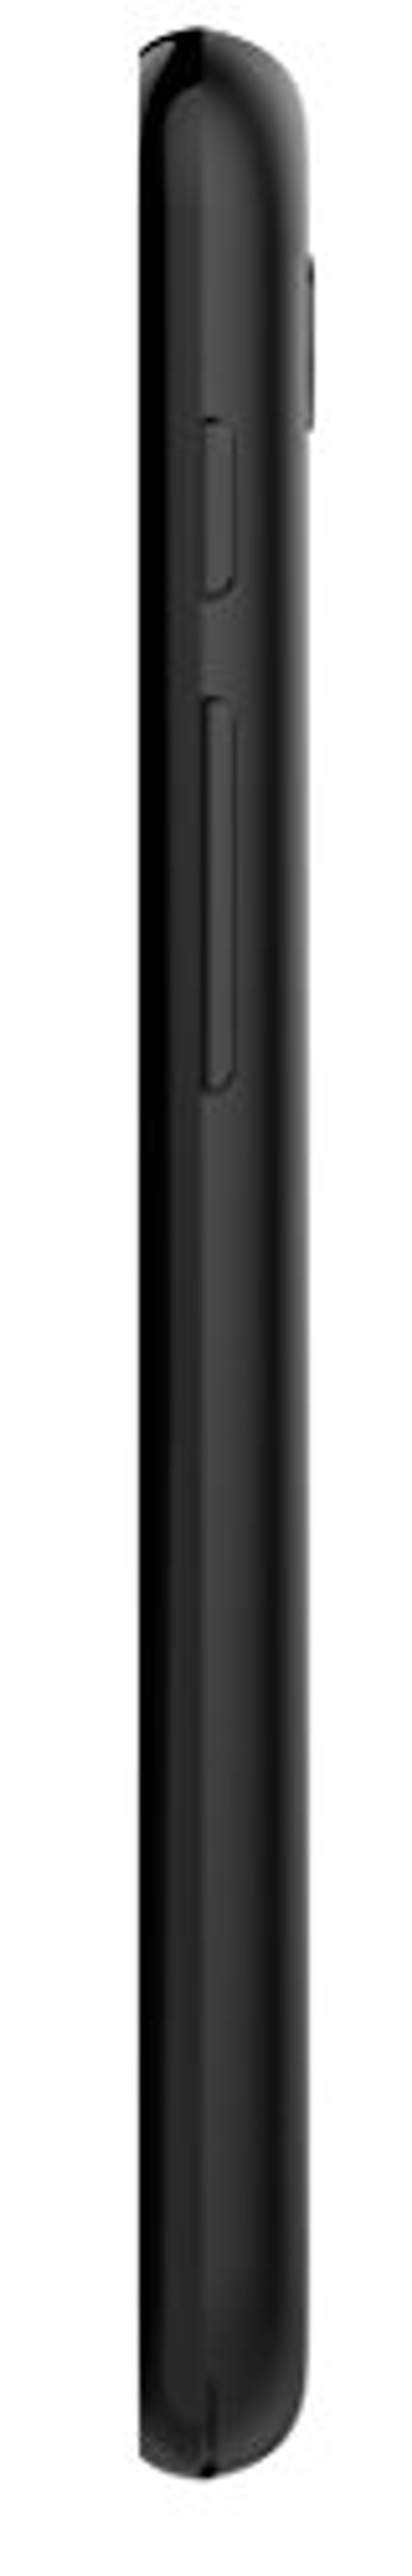 4-5 SIM PIXI ALCATEL BLACK 8 GB 5010D Dual (3G) Schwarz